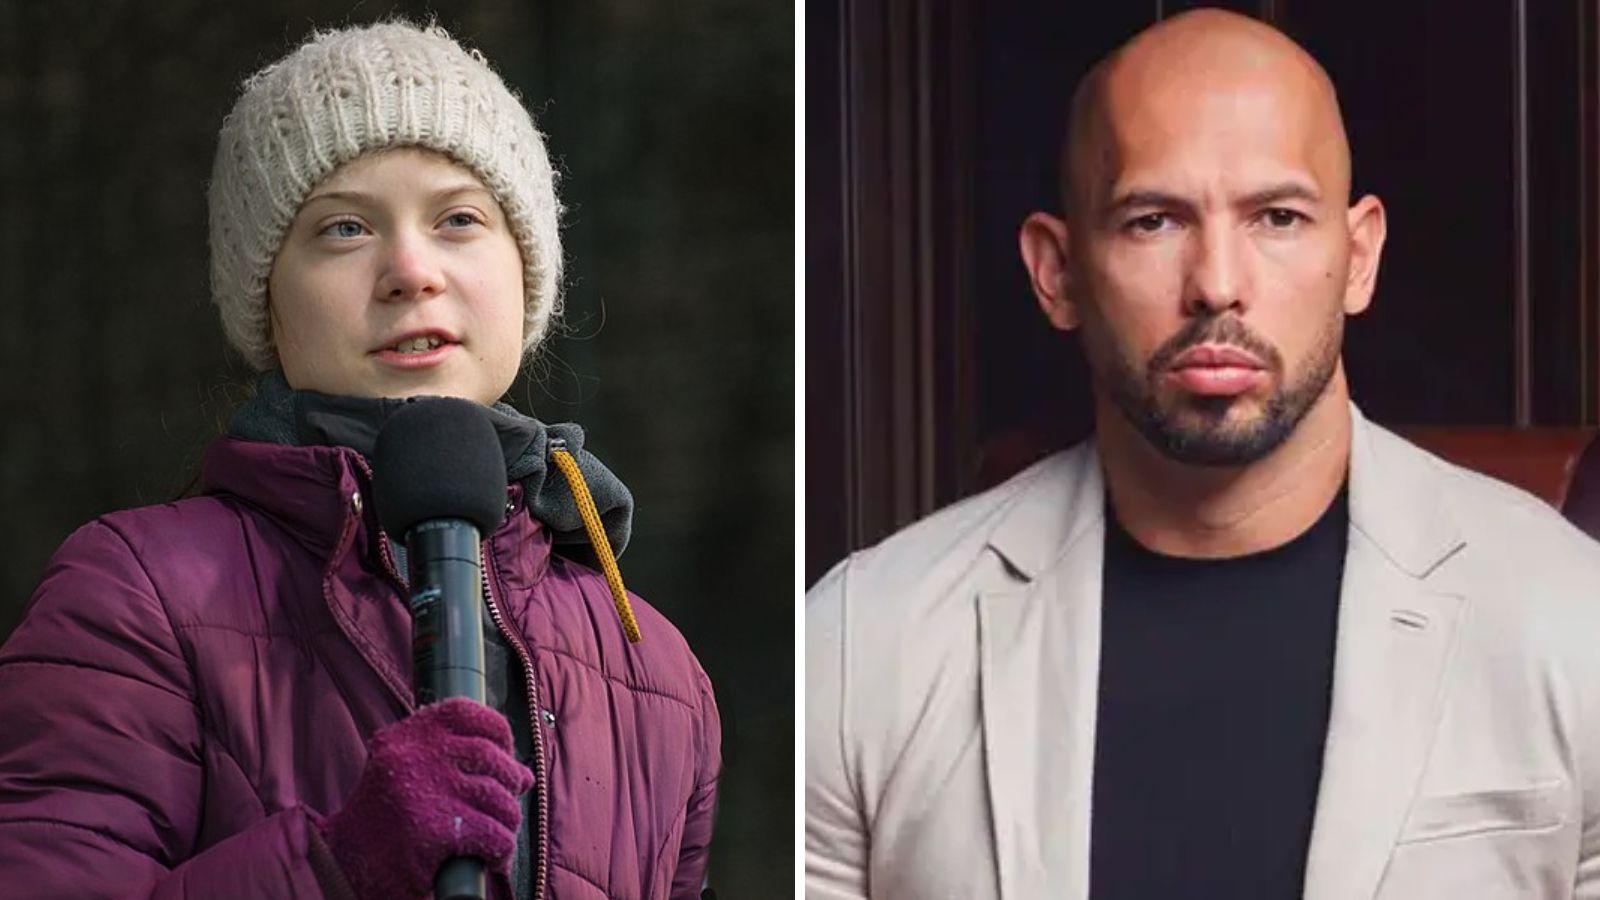 Greta Thunberg says Andrew Tate felt threatened by her